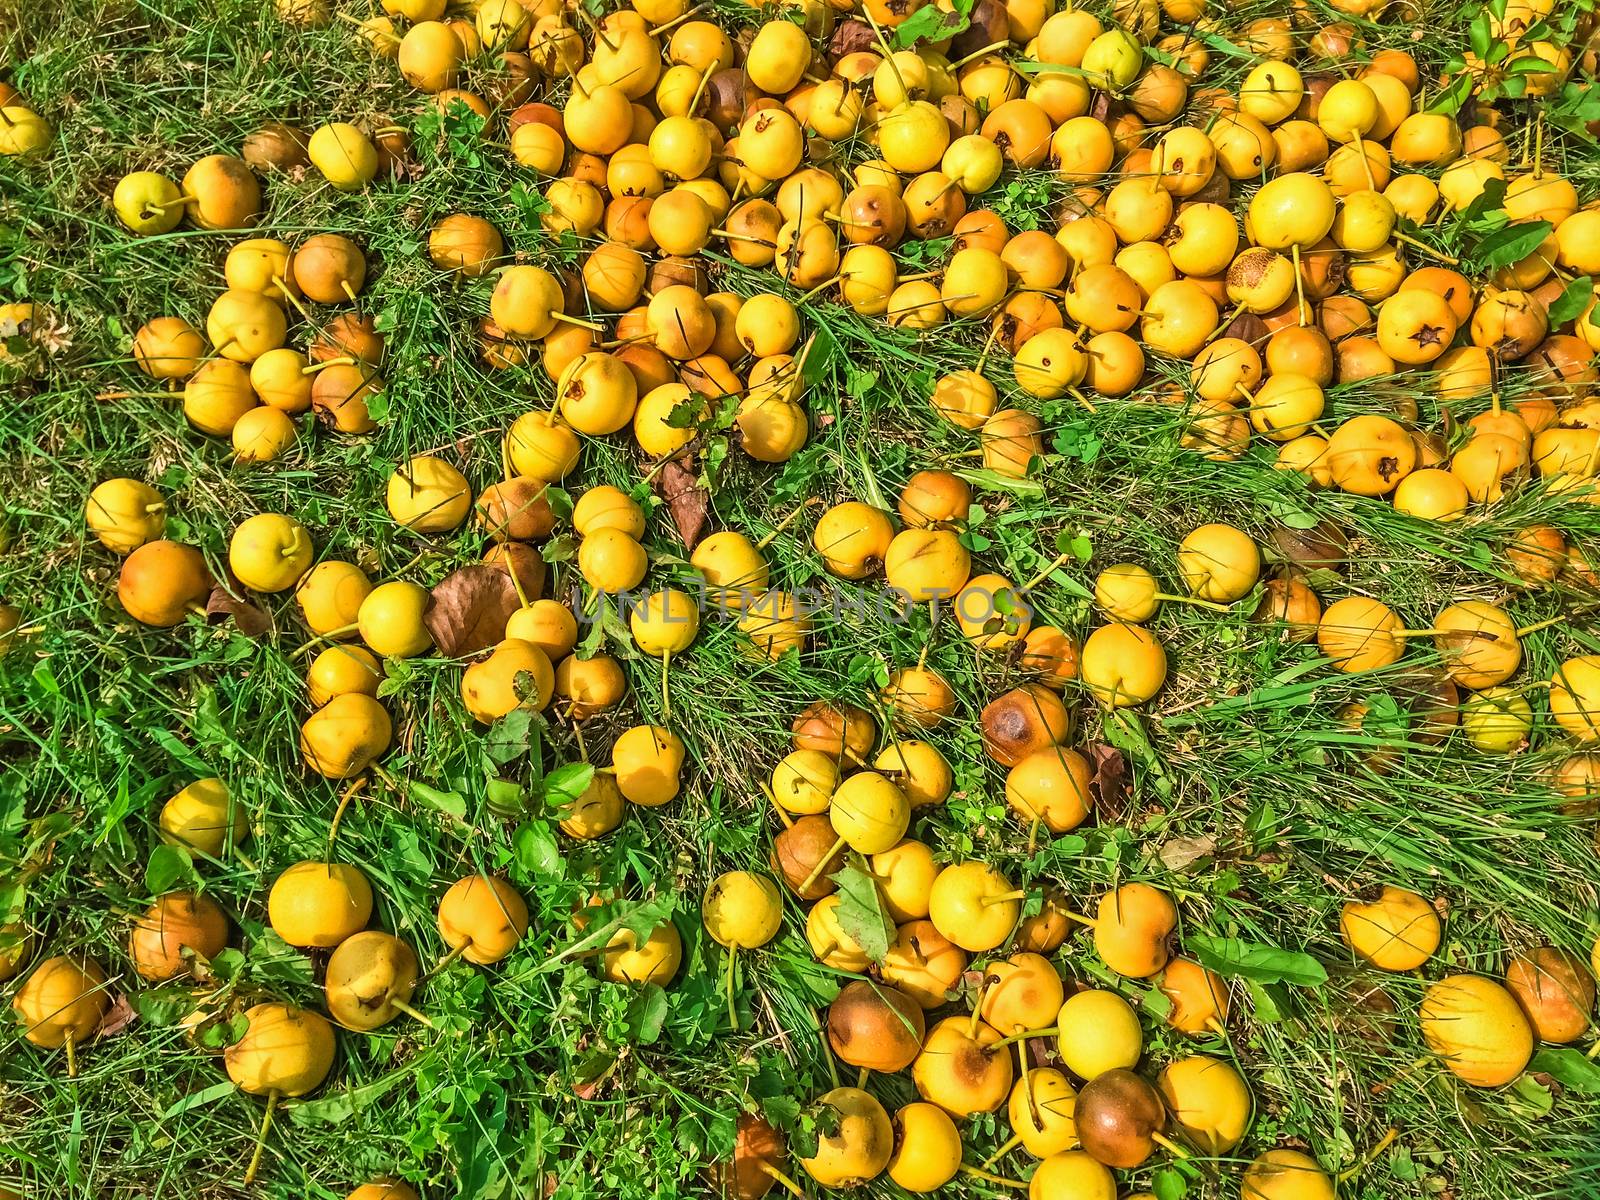 Ripe yellow apples in green grass by anikasalsera